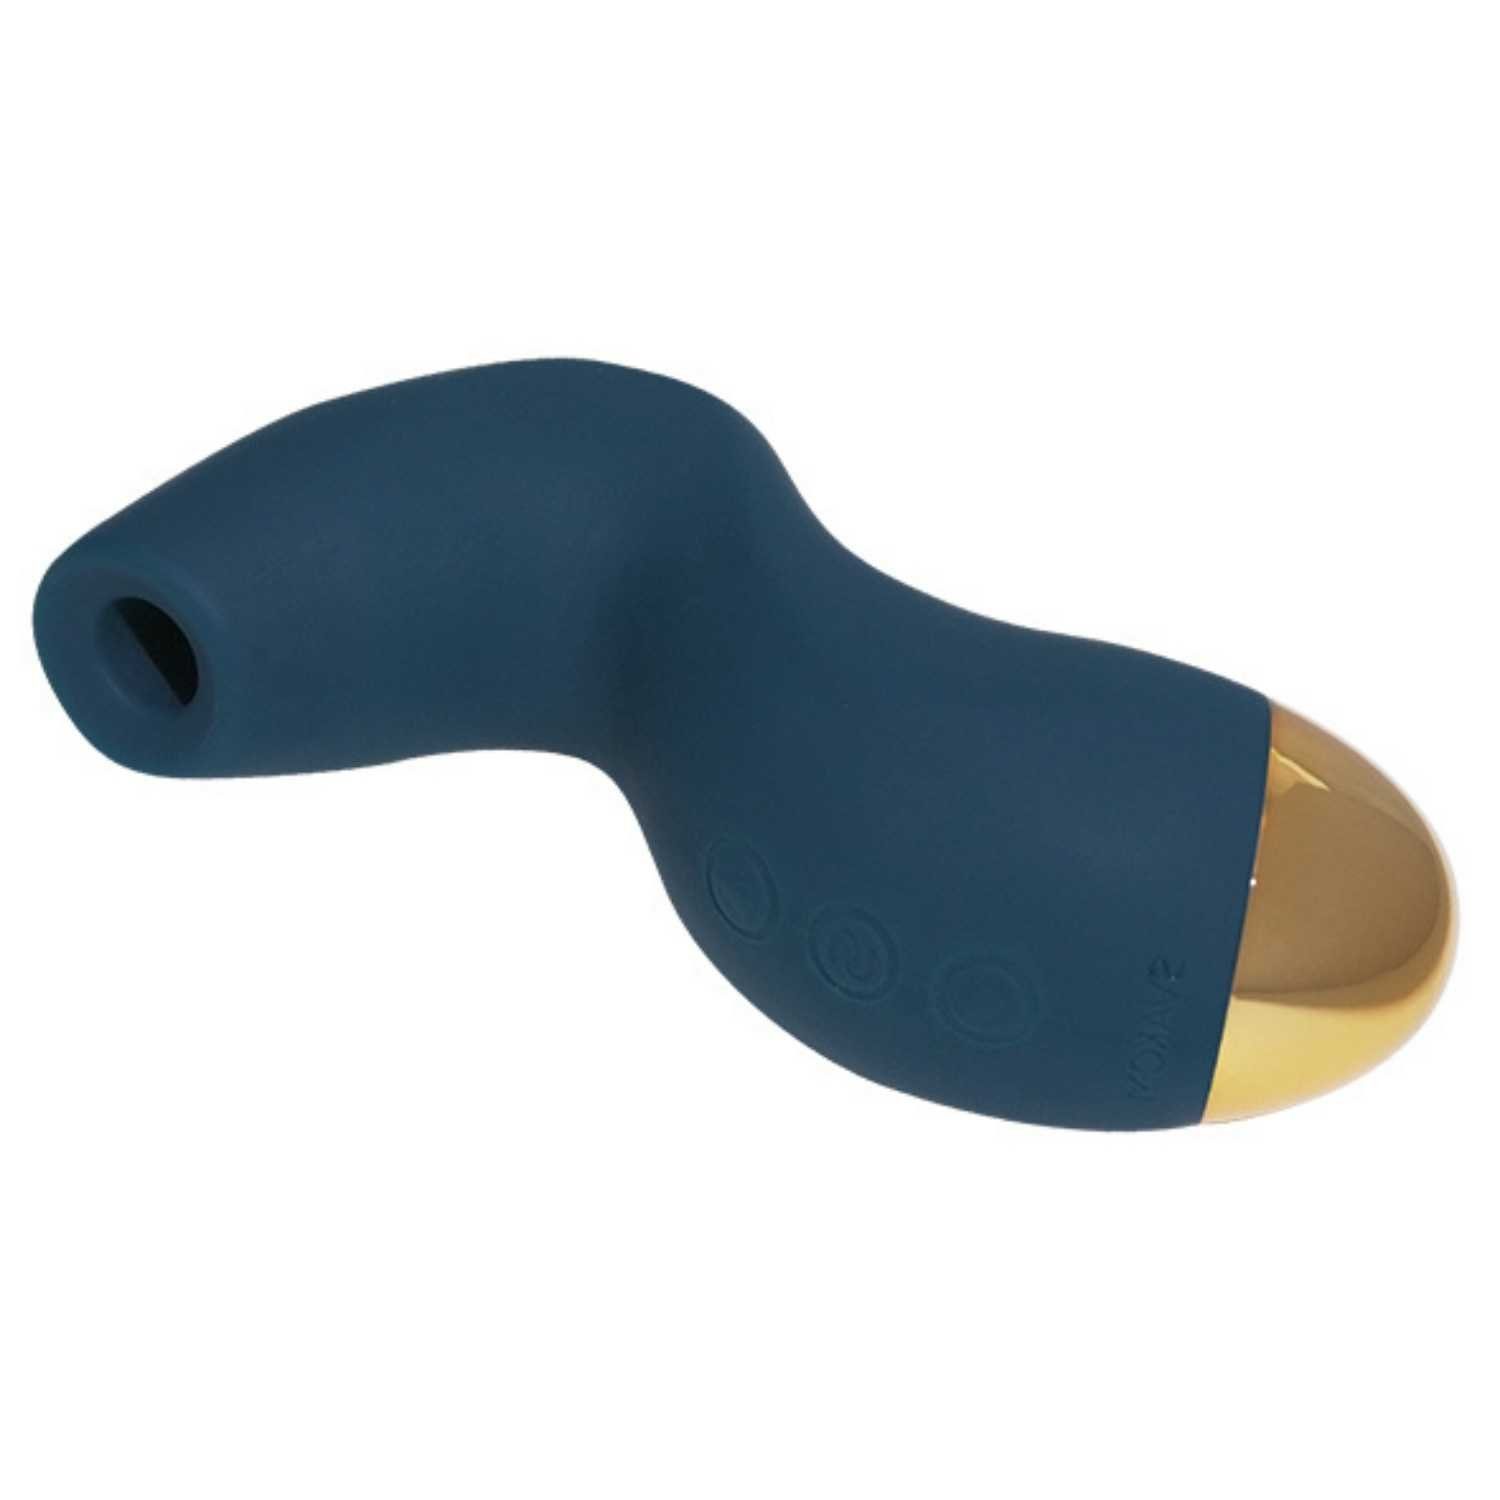 Stimulator, Deep dunkelblau Intensitäten - Svakom Pulse Klitoris-Stimulator 5 Pure Svakom Suction